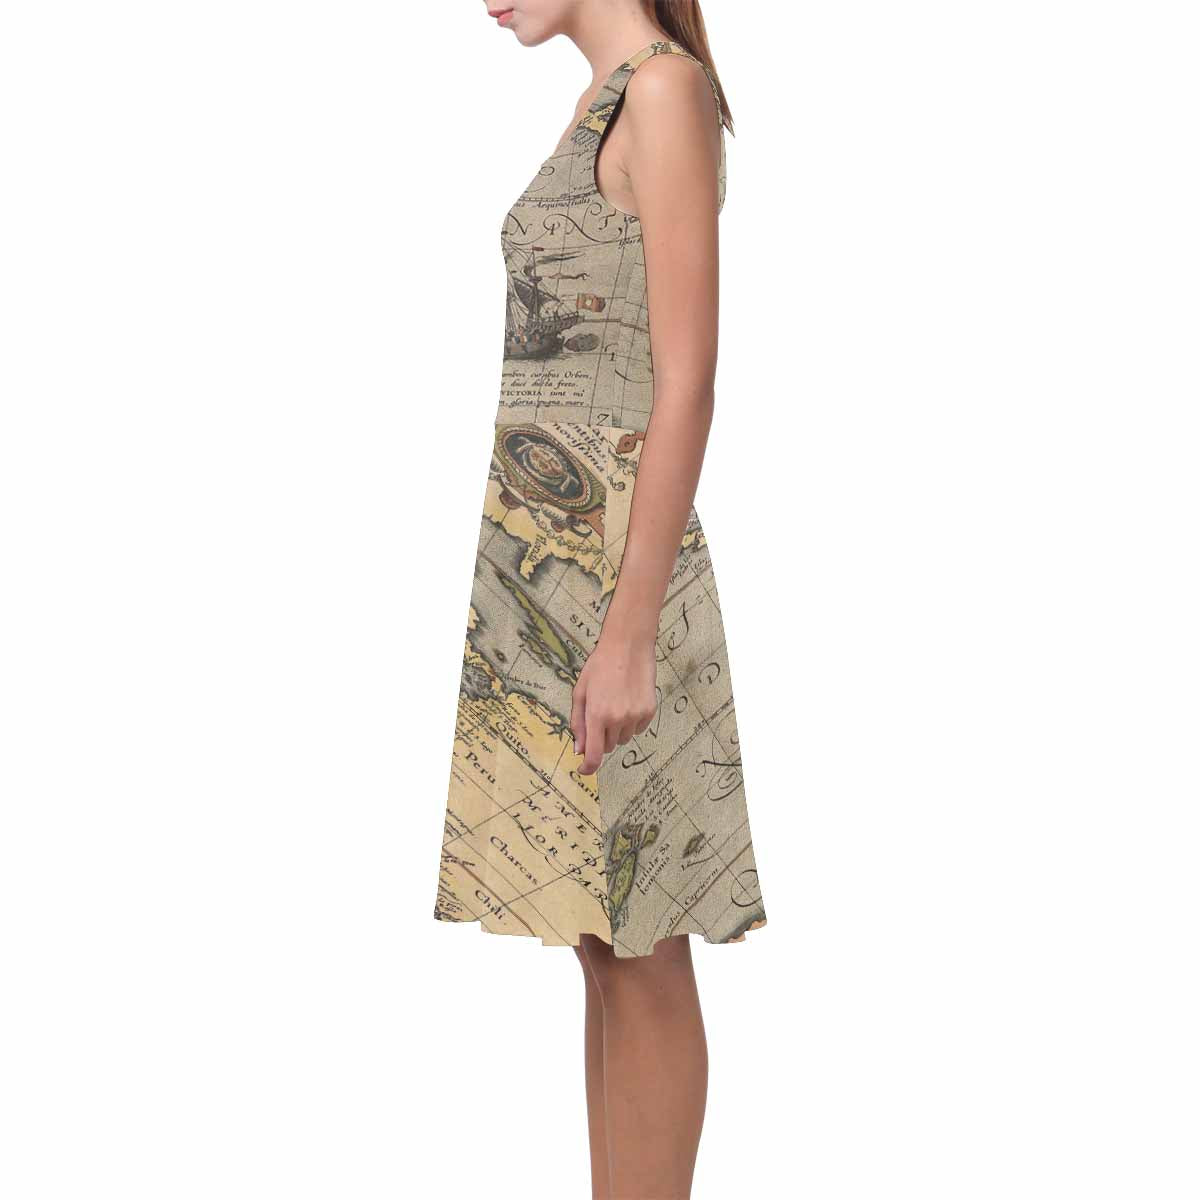 Antique Map casual summer dress, MODEL 09534, design 41